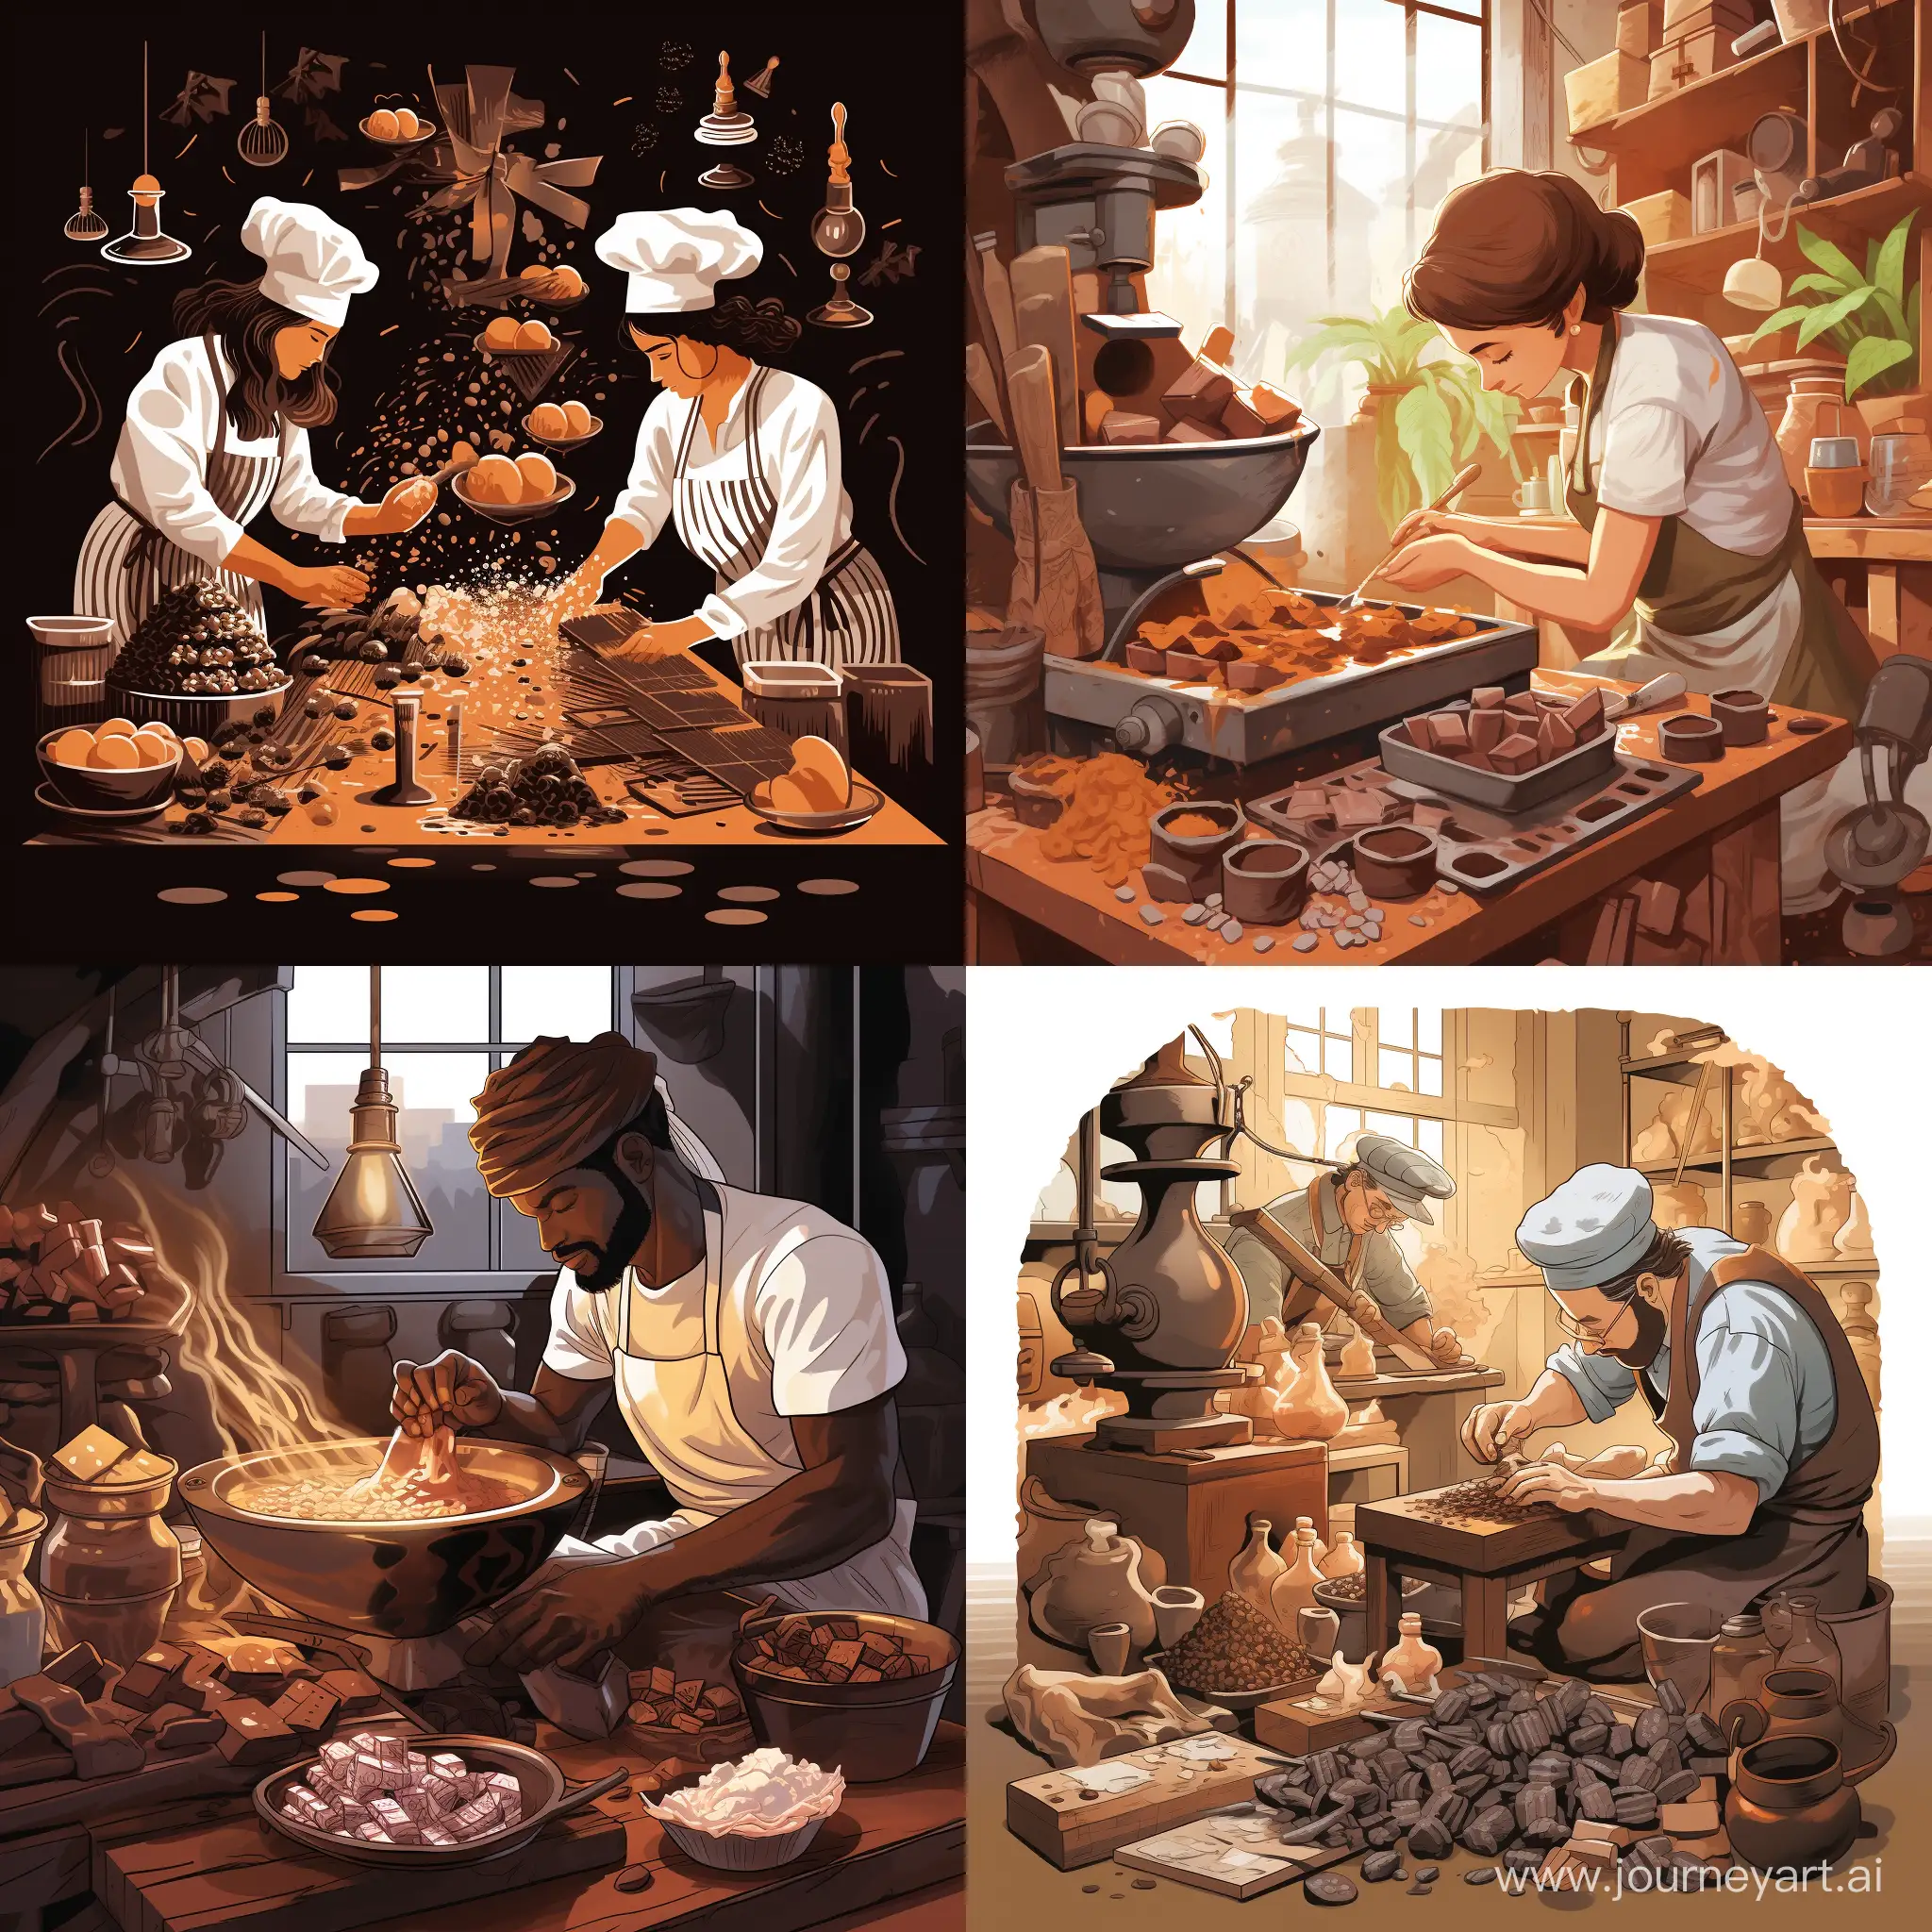 Artisan-Chocolate-Making-Process-in-11-Aspect-Ratio-Illustration-62775